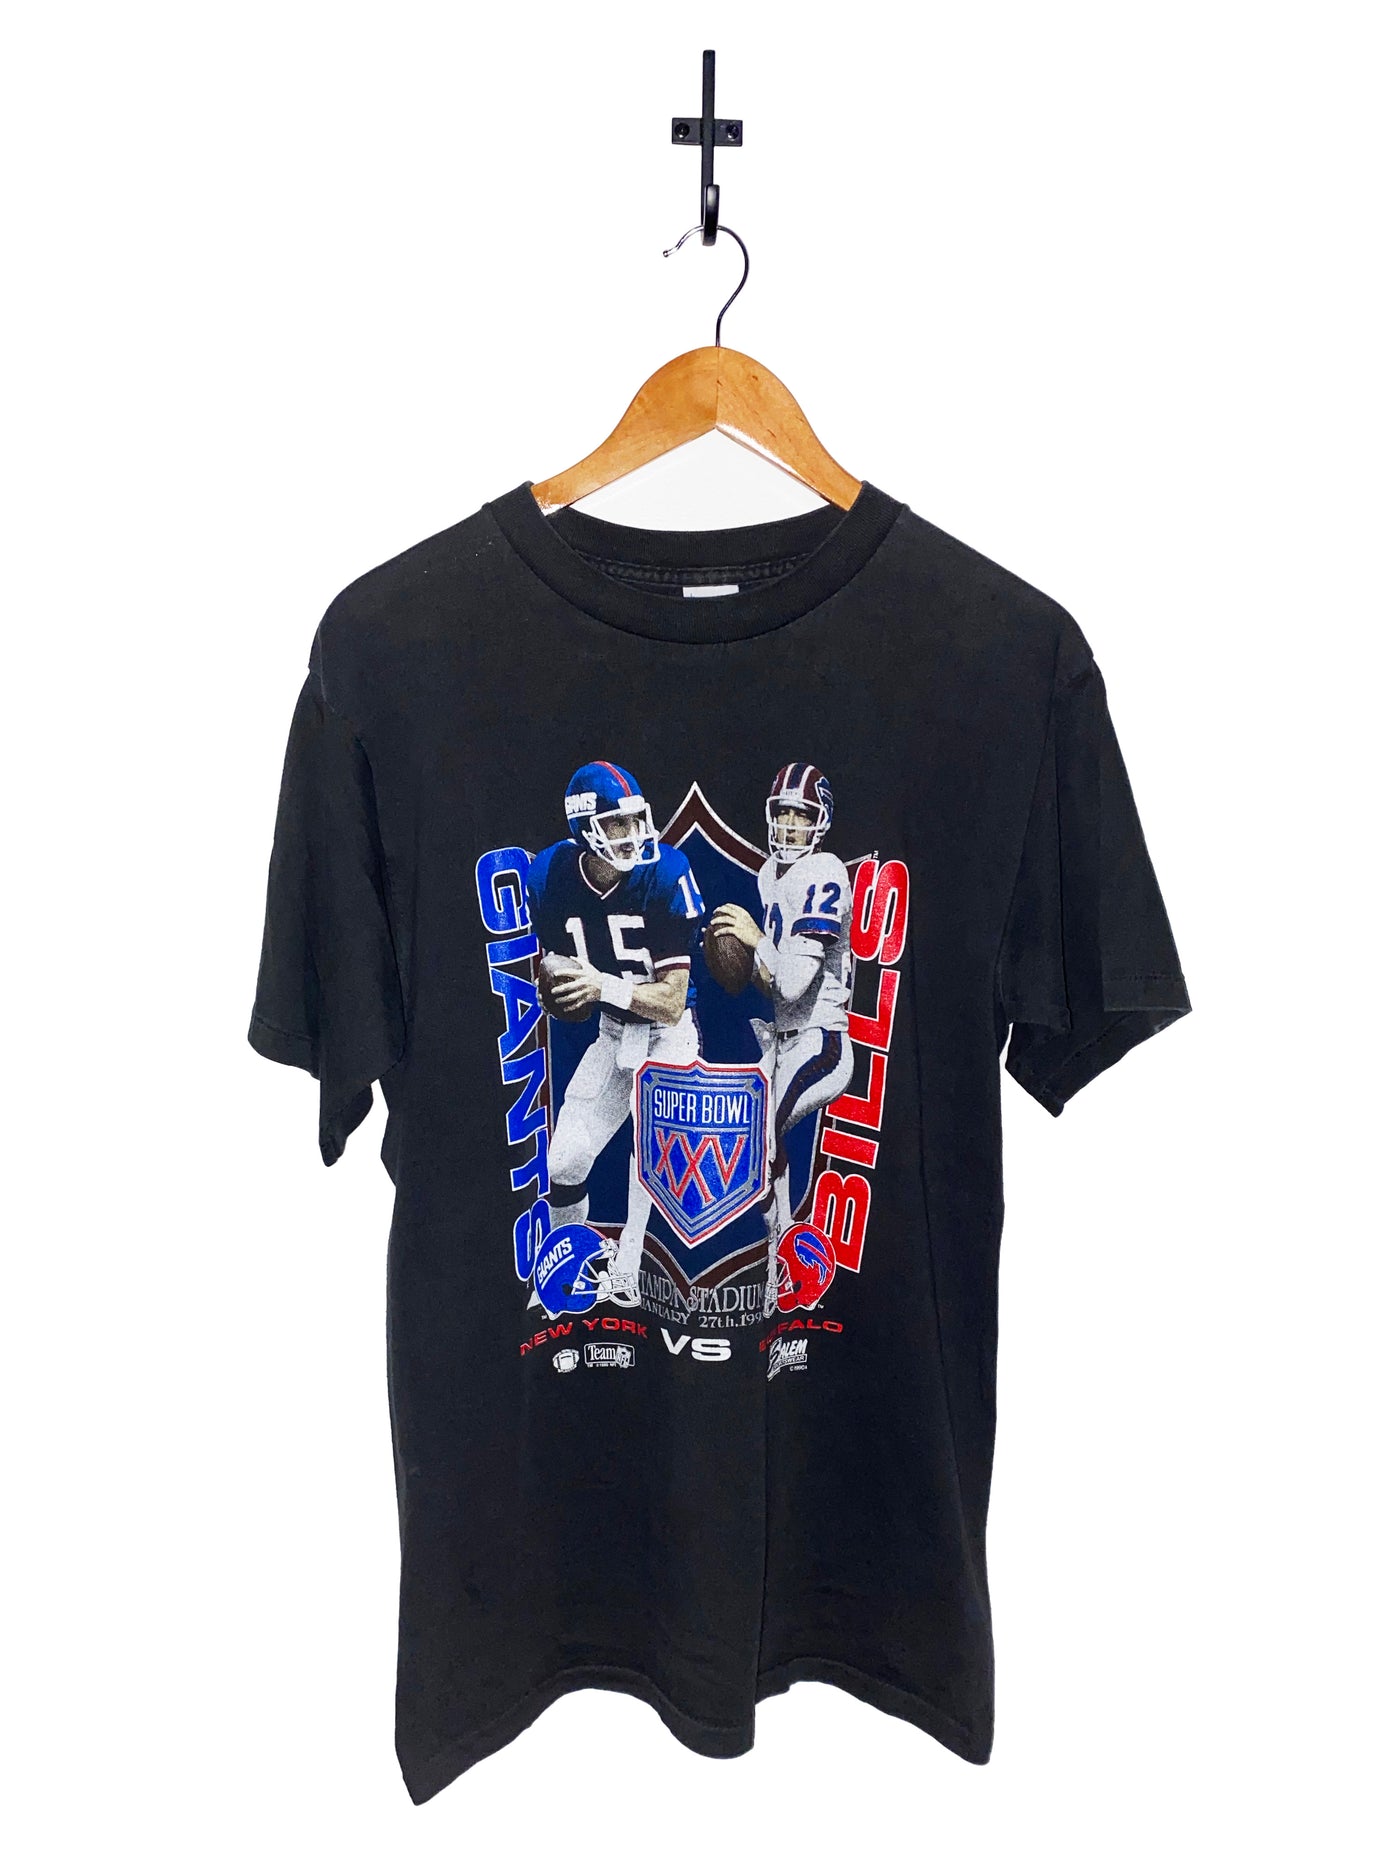 Vintage 1991 New York Giants Superbowl T-Shirt